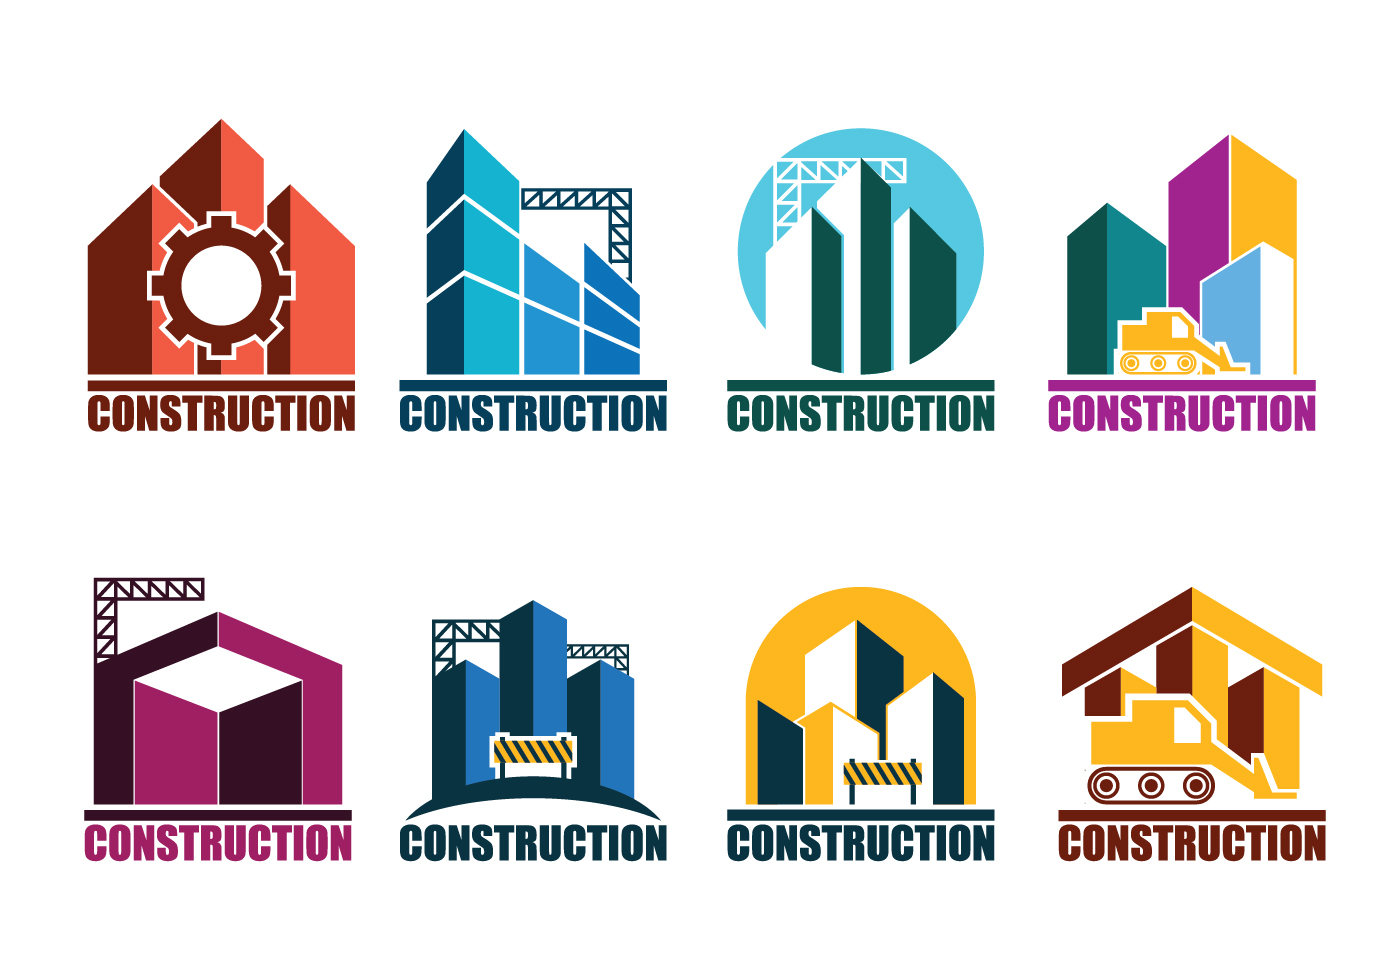 Download Construction Logos Vector Set - Download Free Vectors ...